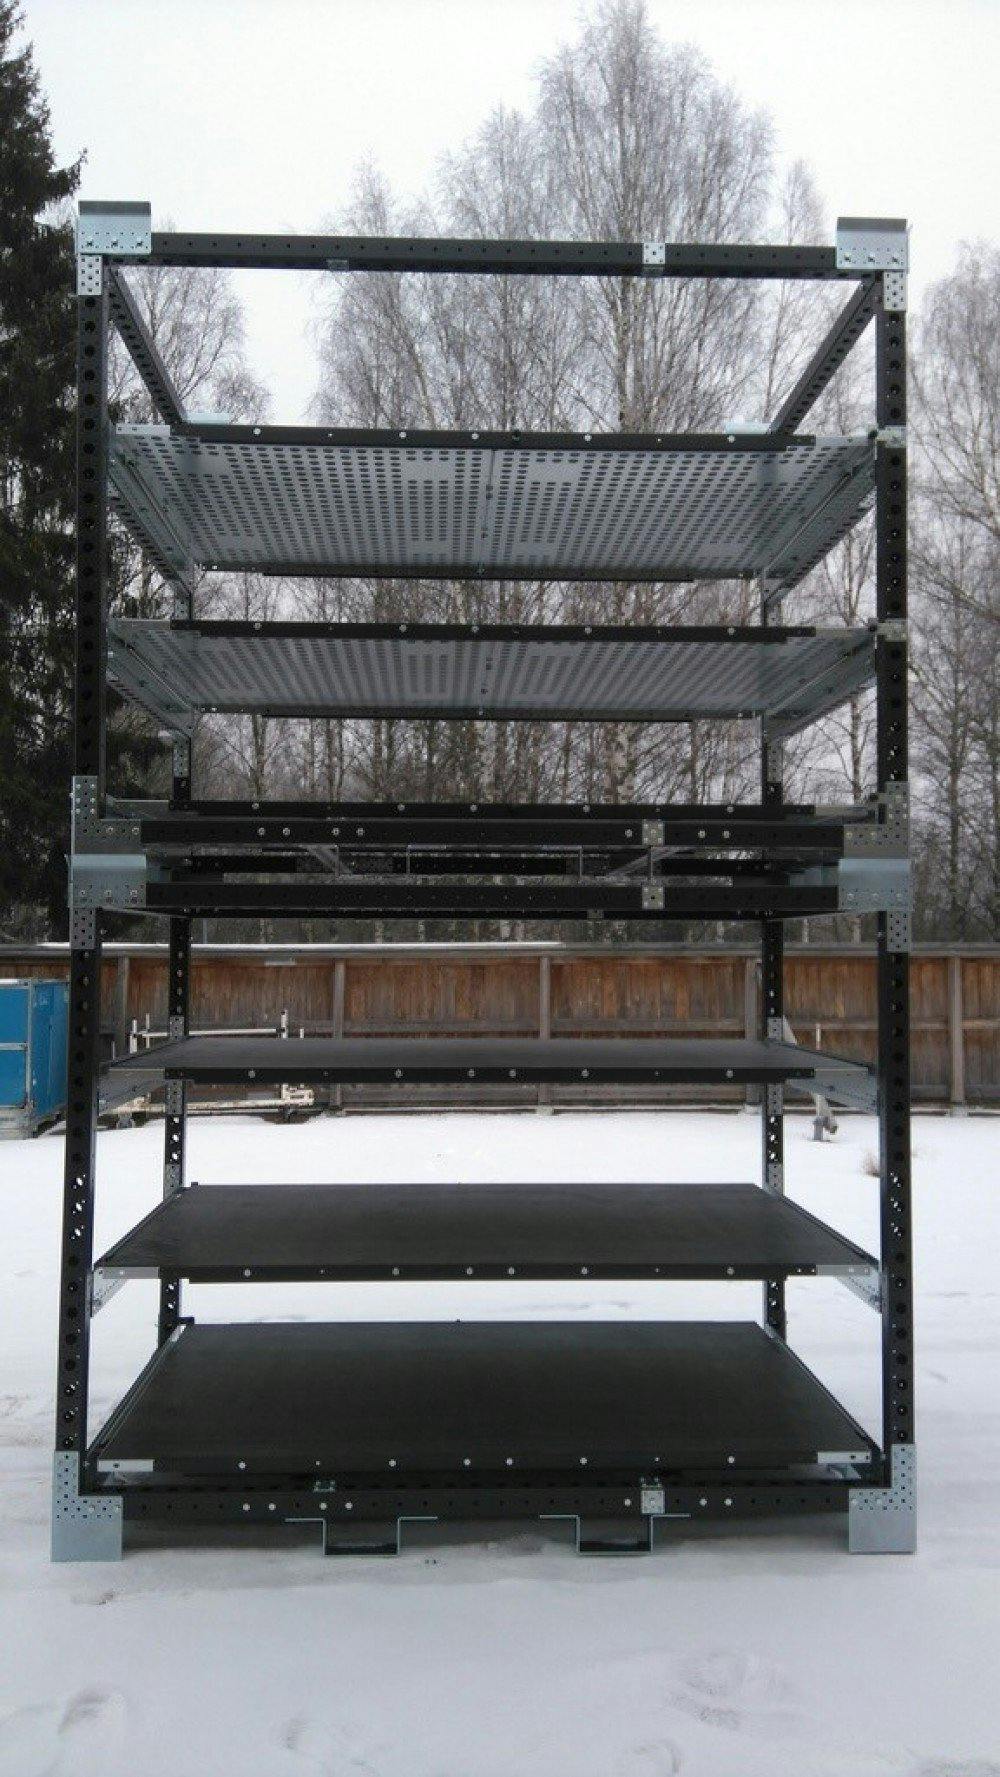 FlexQube racks stacked in snow